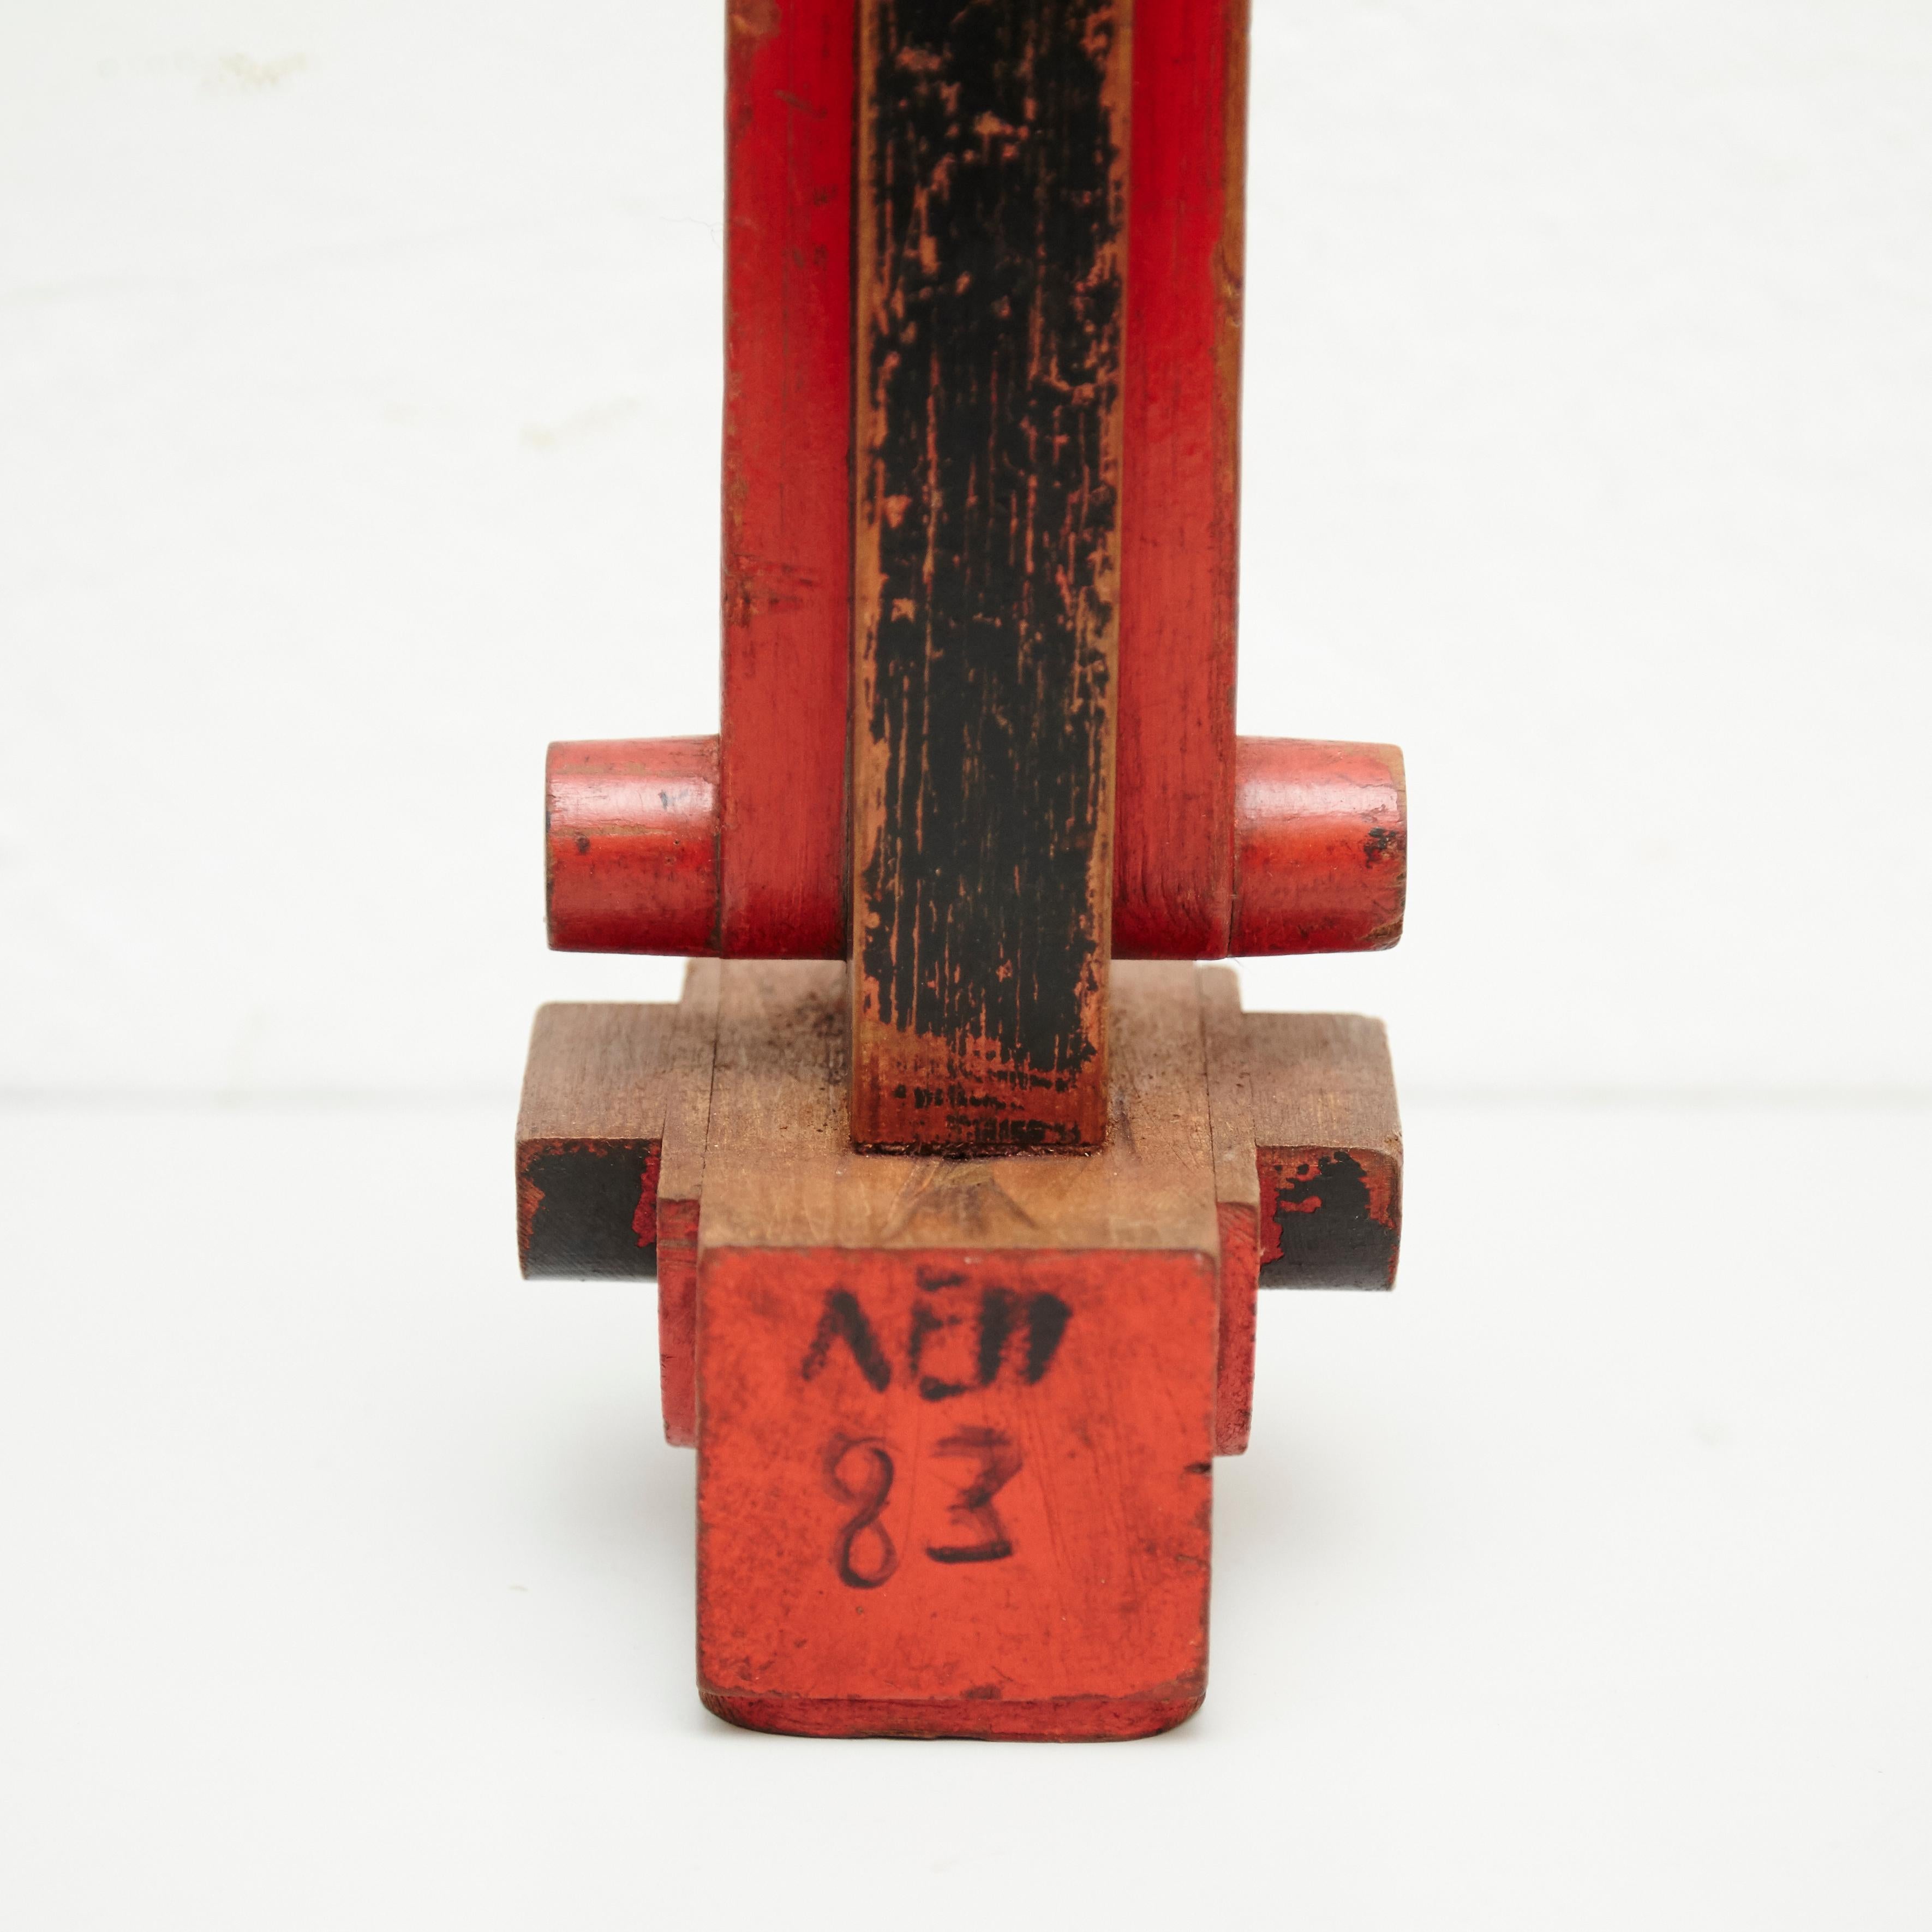 Modern Vicenç Orsolà Sculpture Free Composition AEM-83 Red Black Wood